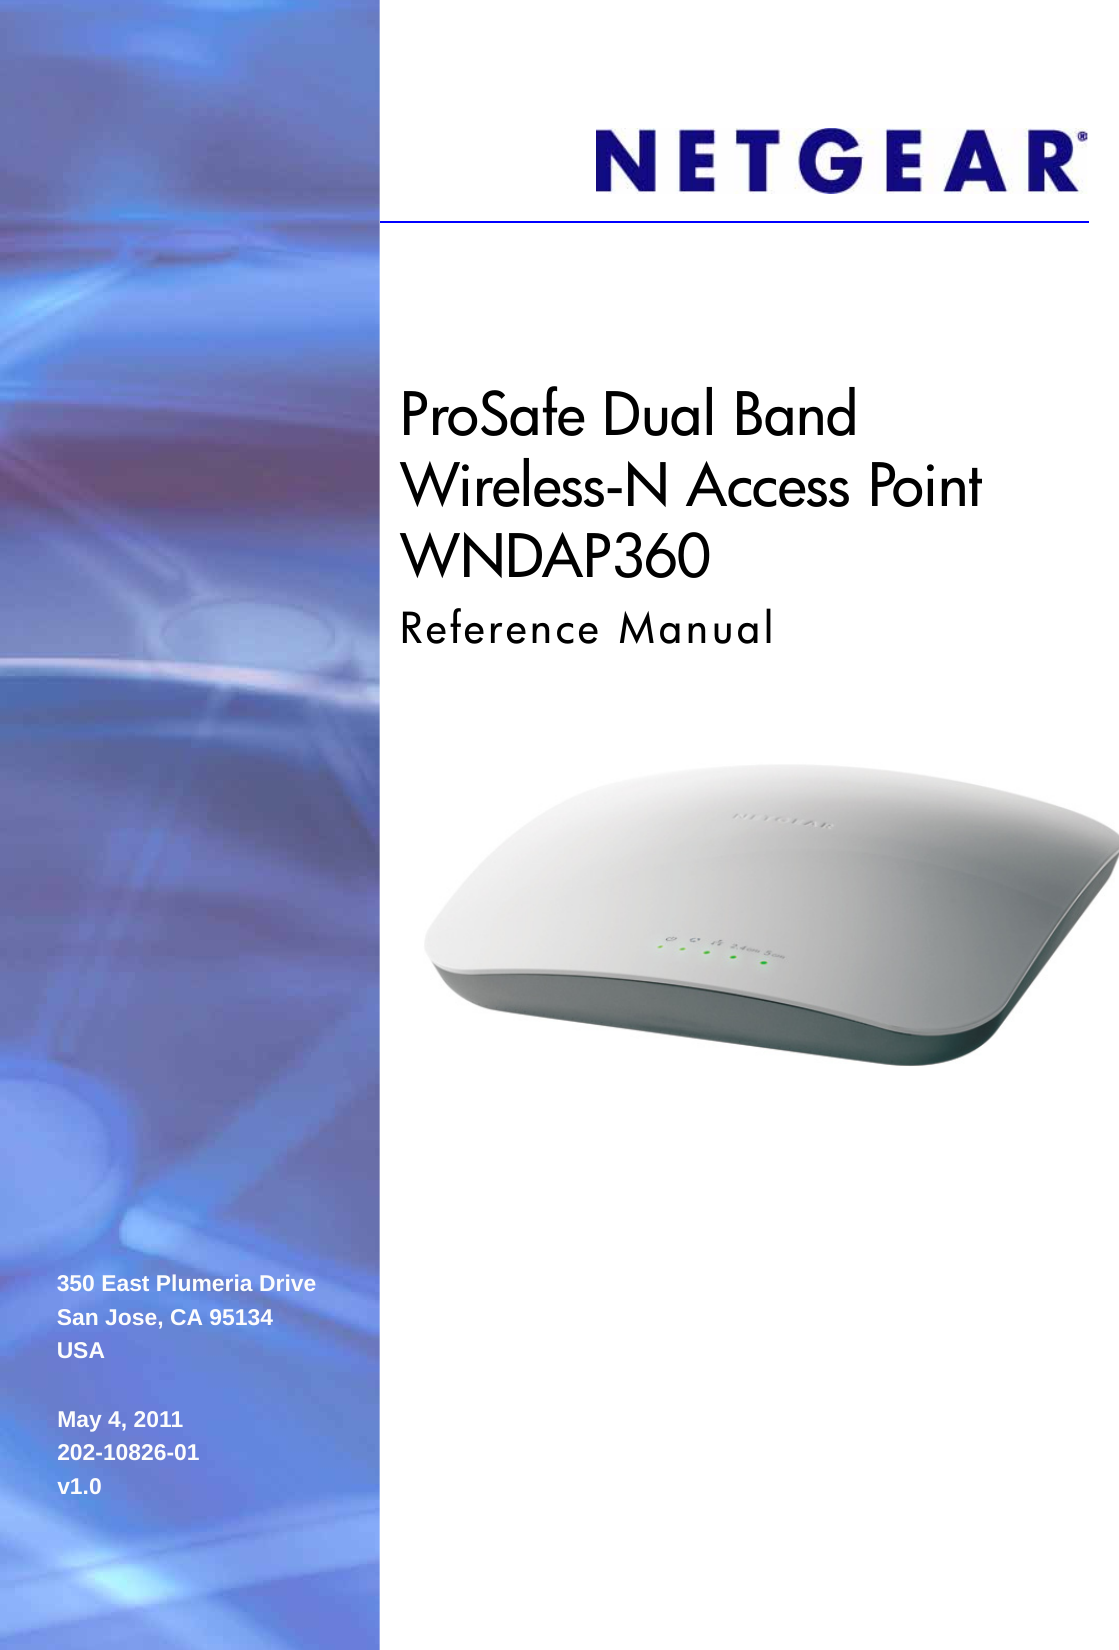 350 East Plumeria DriveSan Jose, CA 95134USAMay 4, 2011202-10826-01v1.0ProSafe Dual Band Wireless-N Access Point WNDAP360Reference Manual